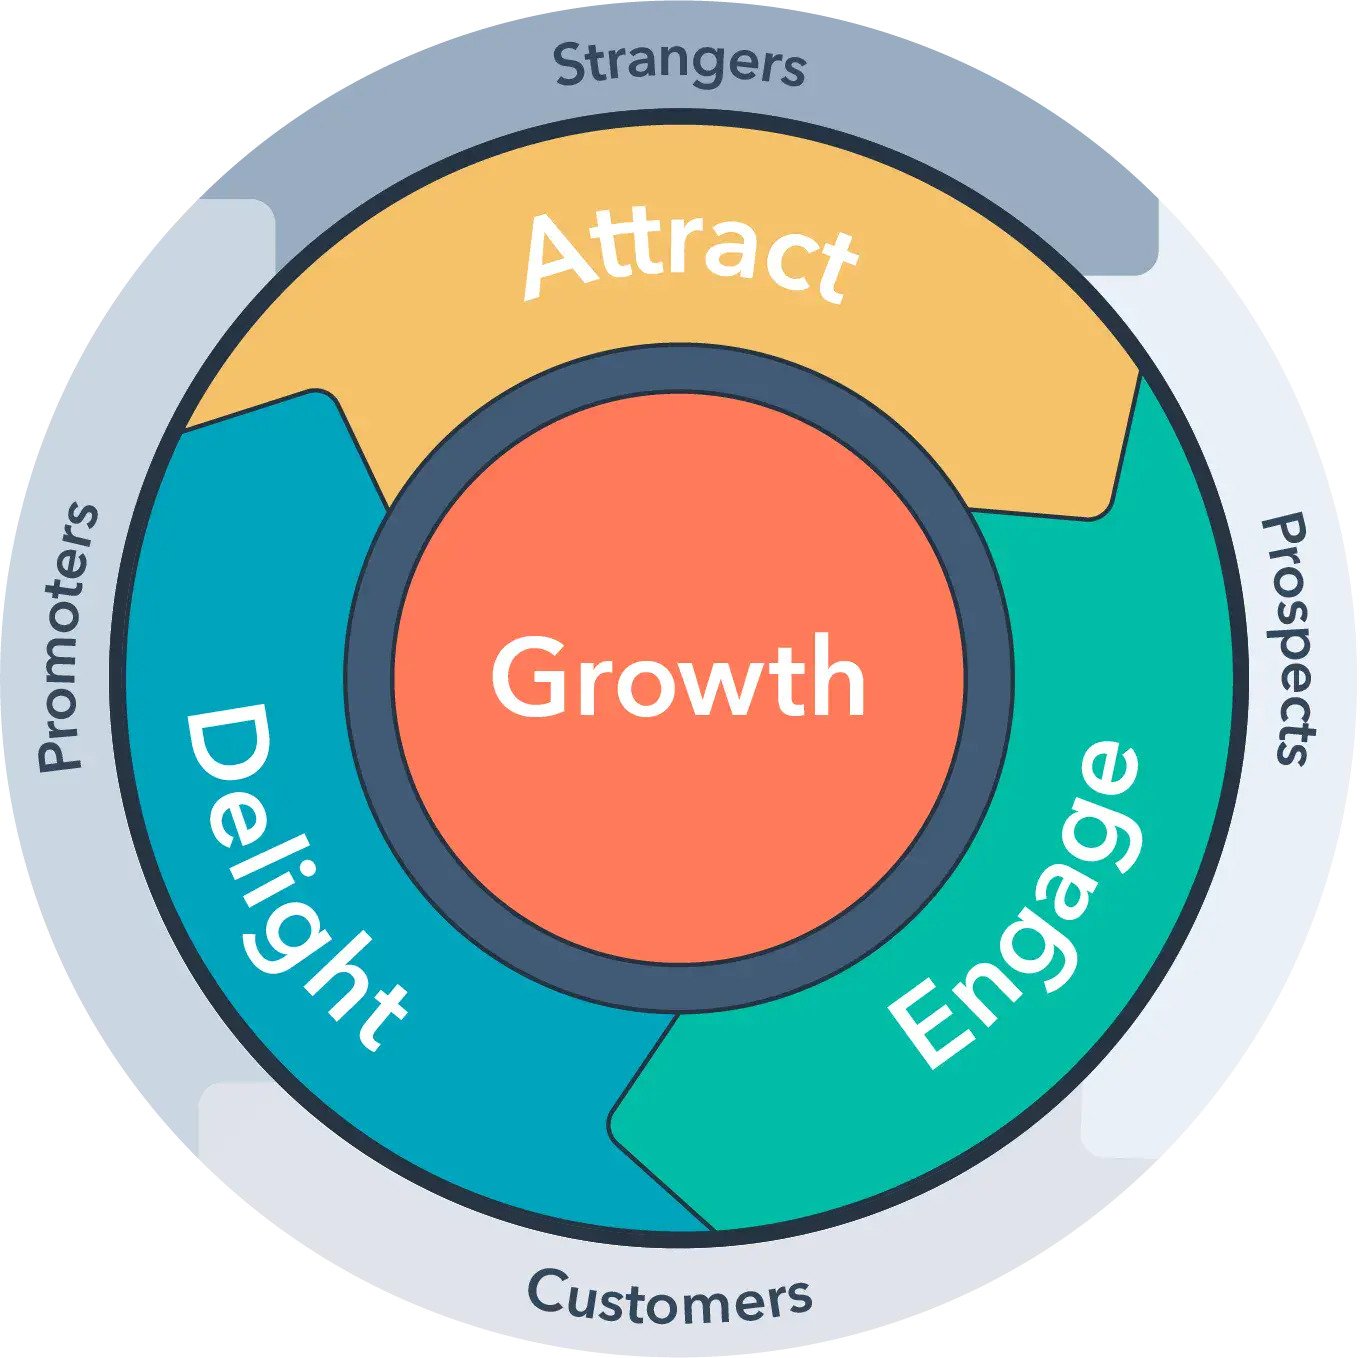 Three-part cycle of inbound marketing